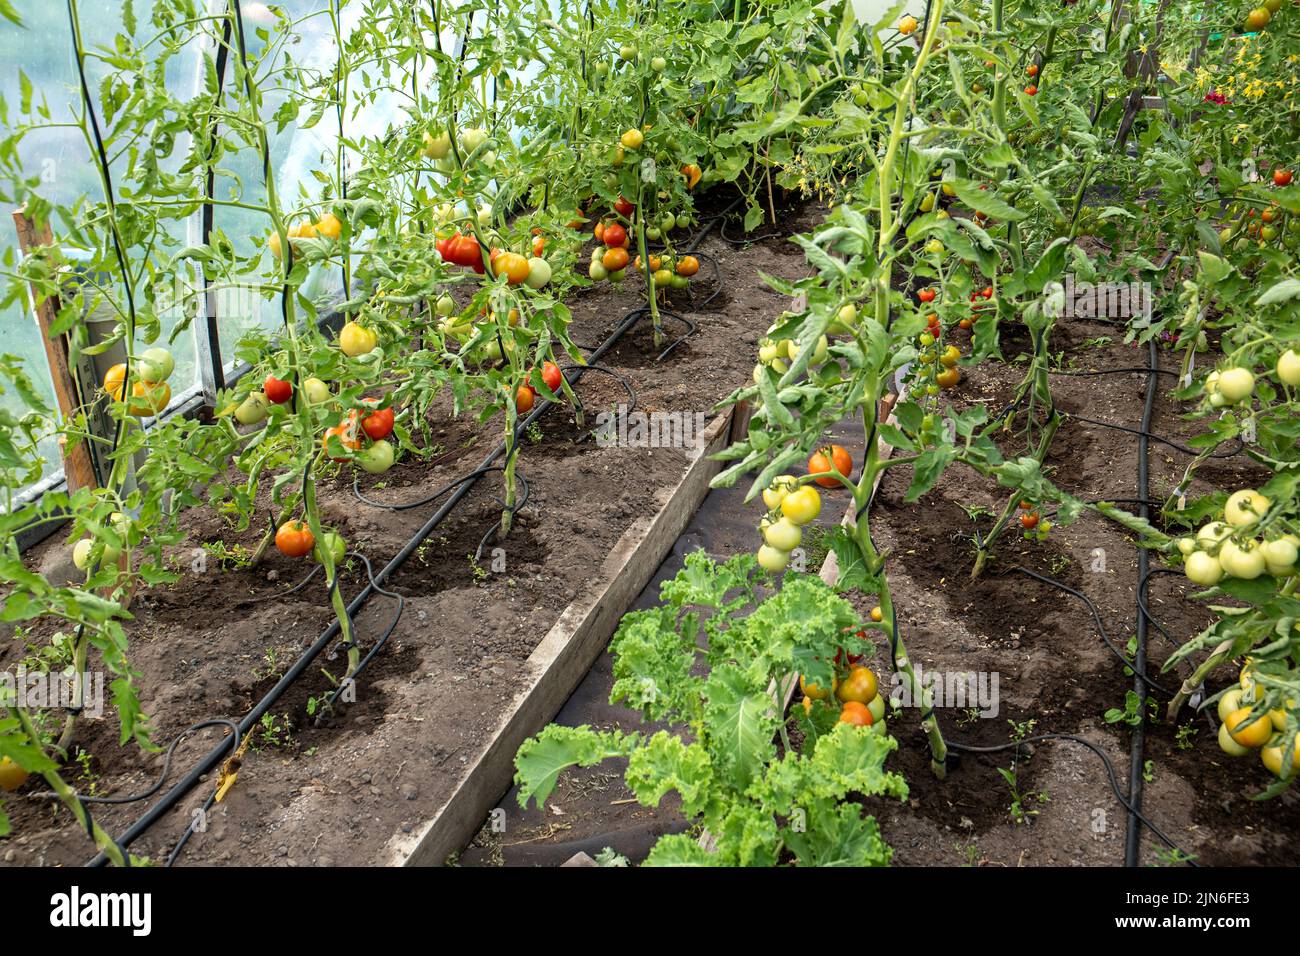 Agua de plantas de tomate fotografías e imágenes de alta resolución - Alamy